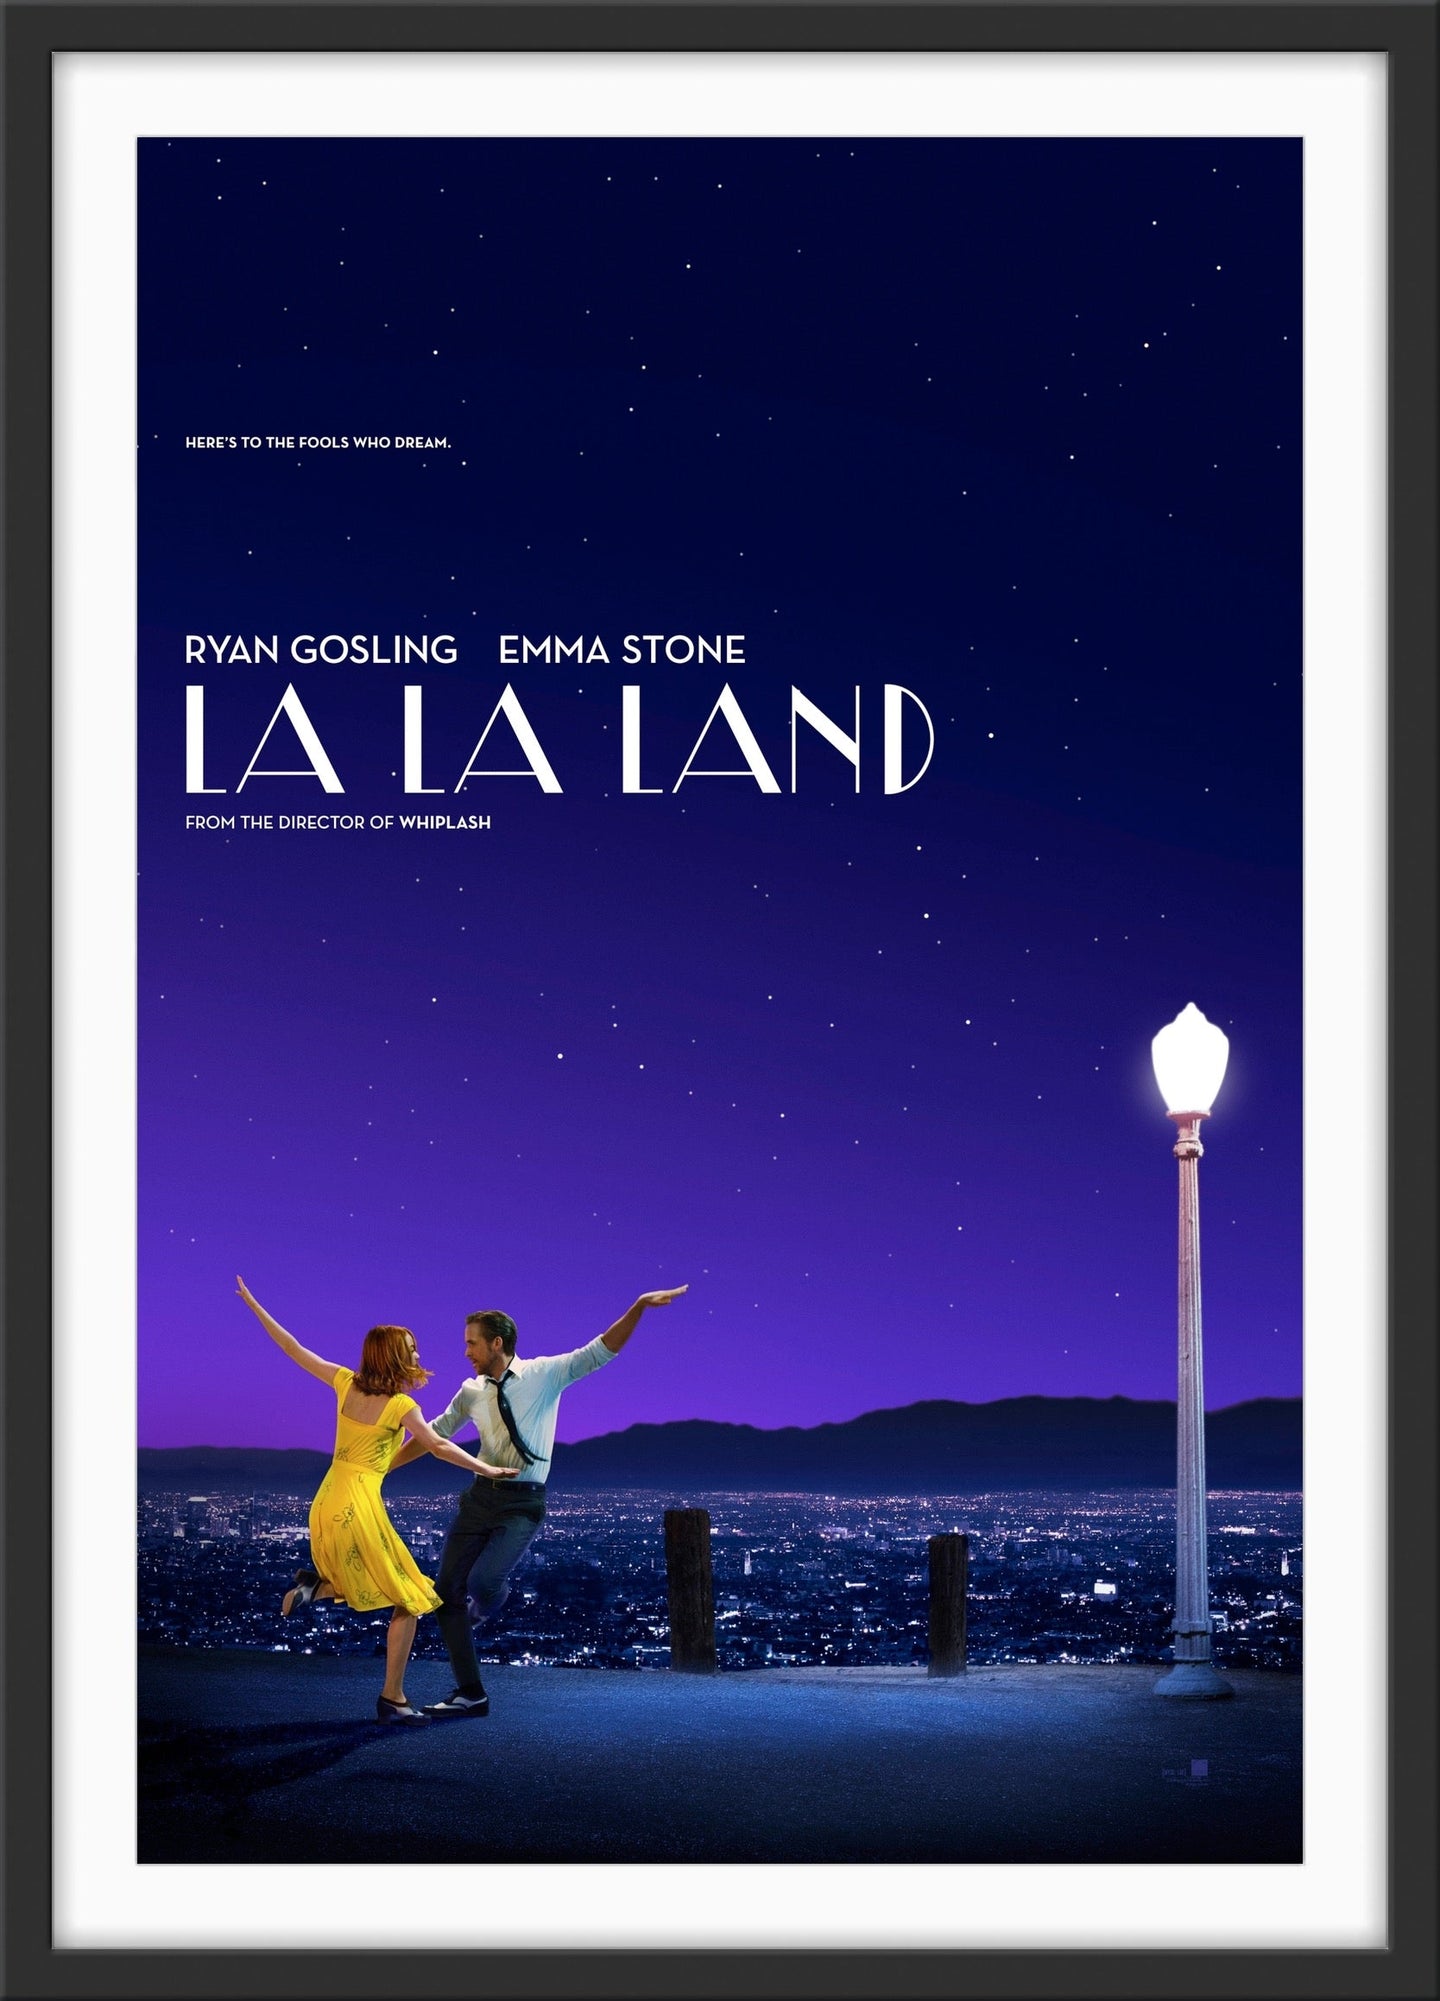 An original movie poster for the film La La Land